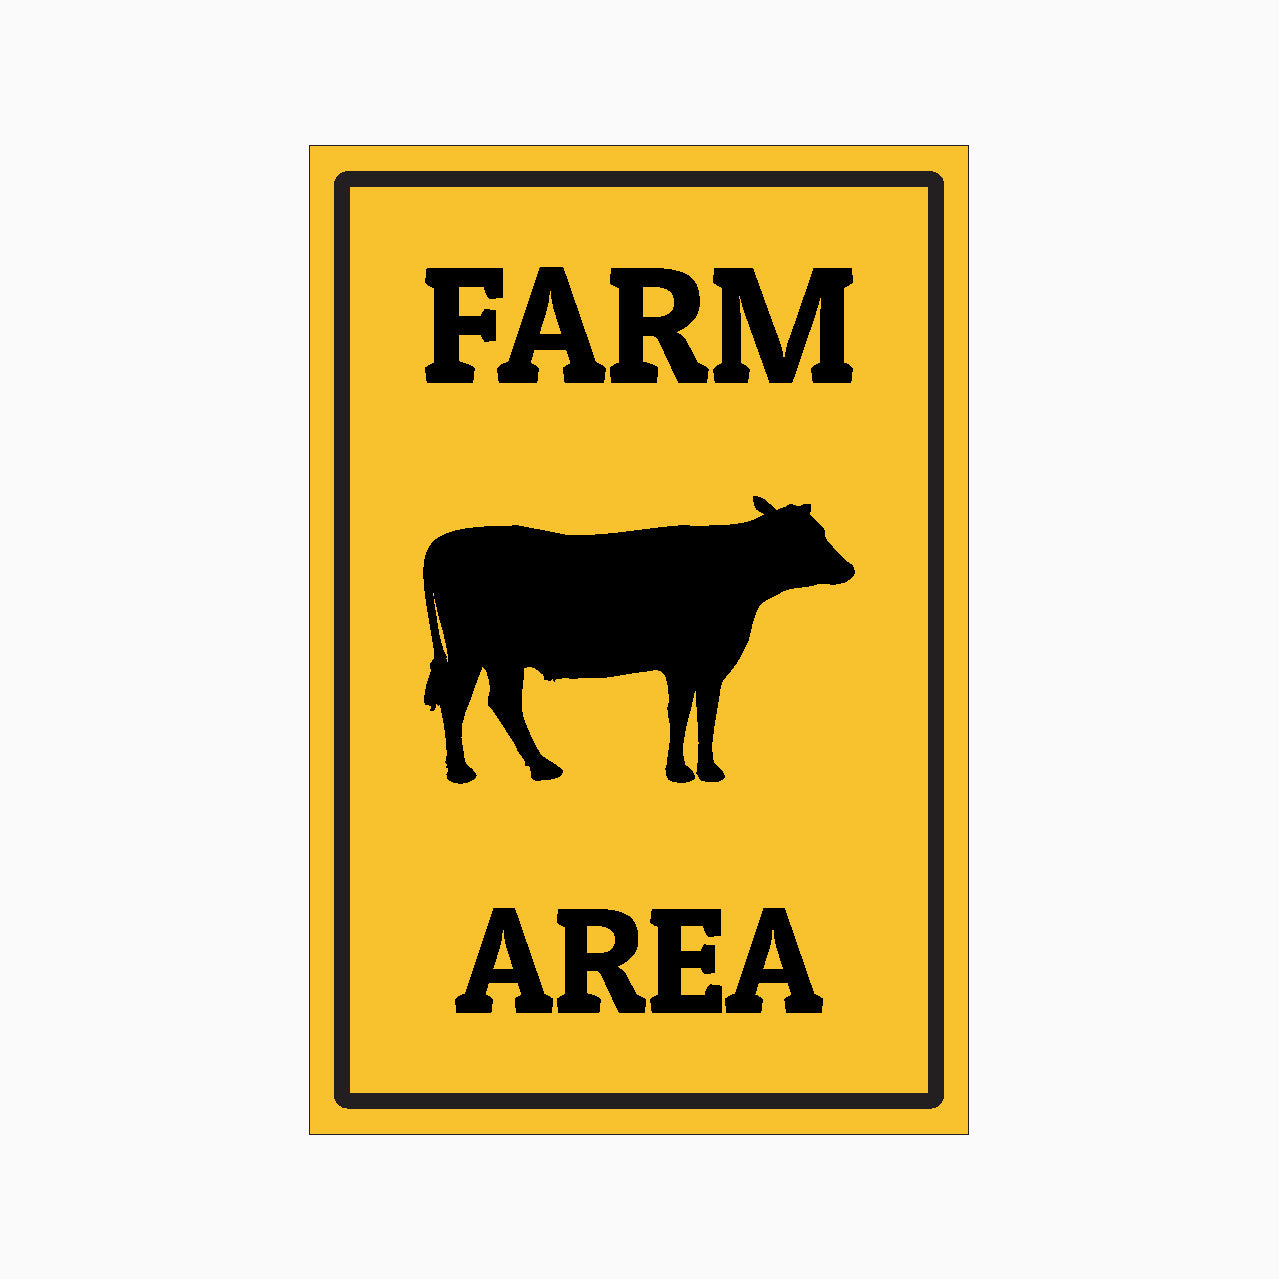 FARM AREA SIGN - farm signs - online shop - get signs